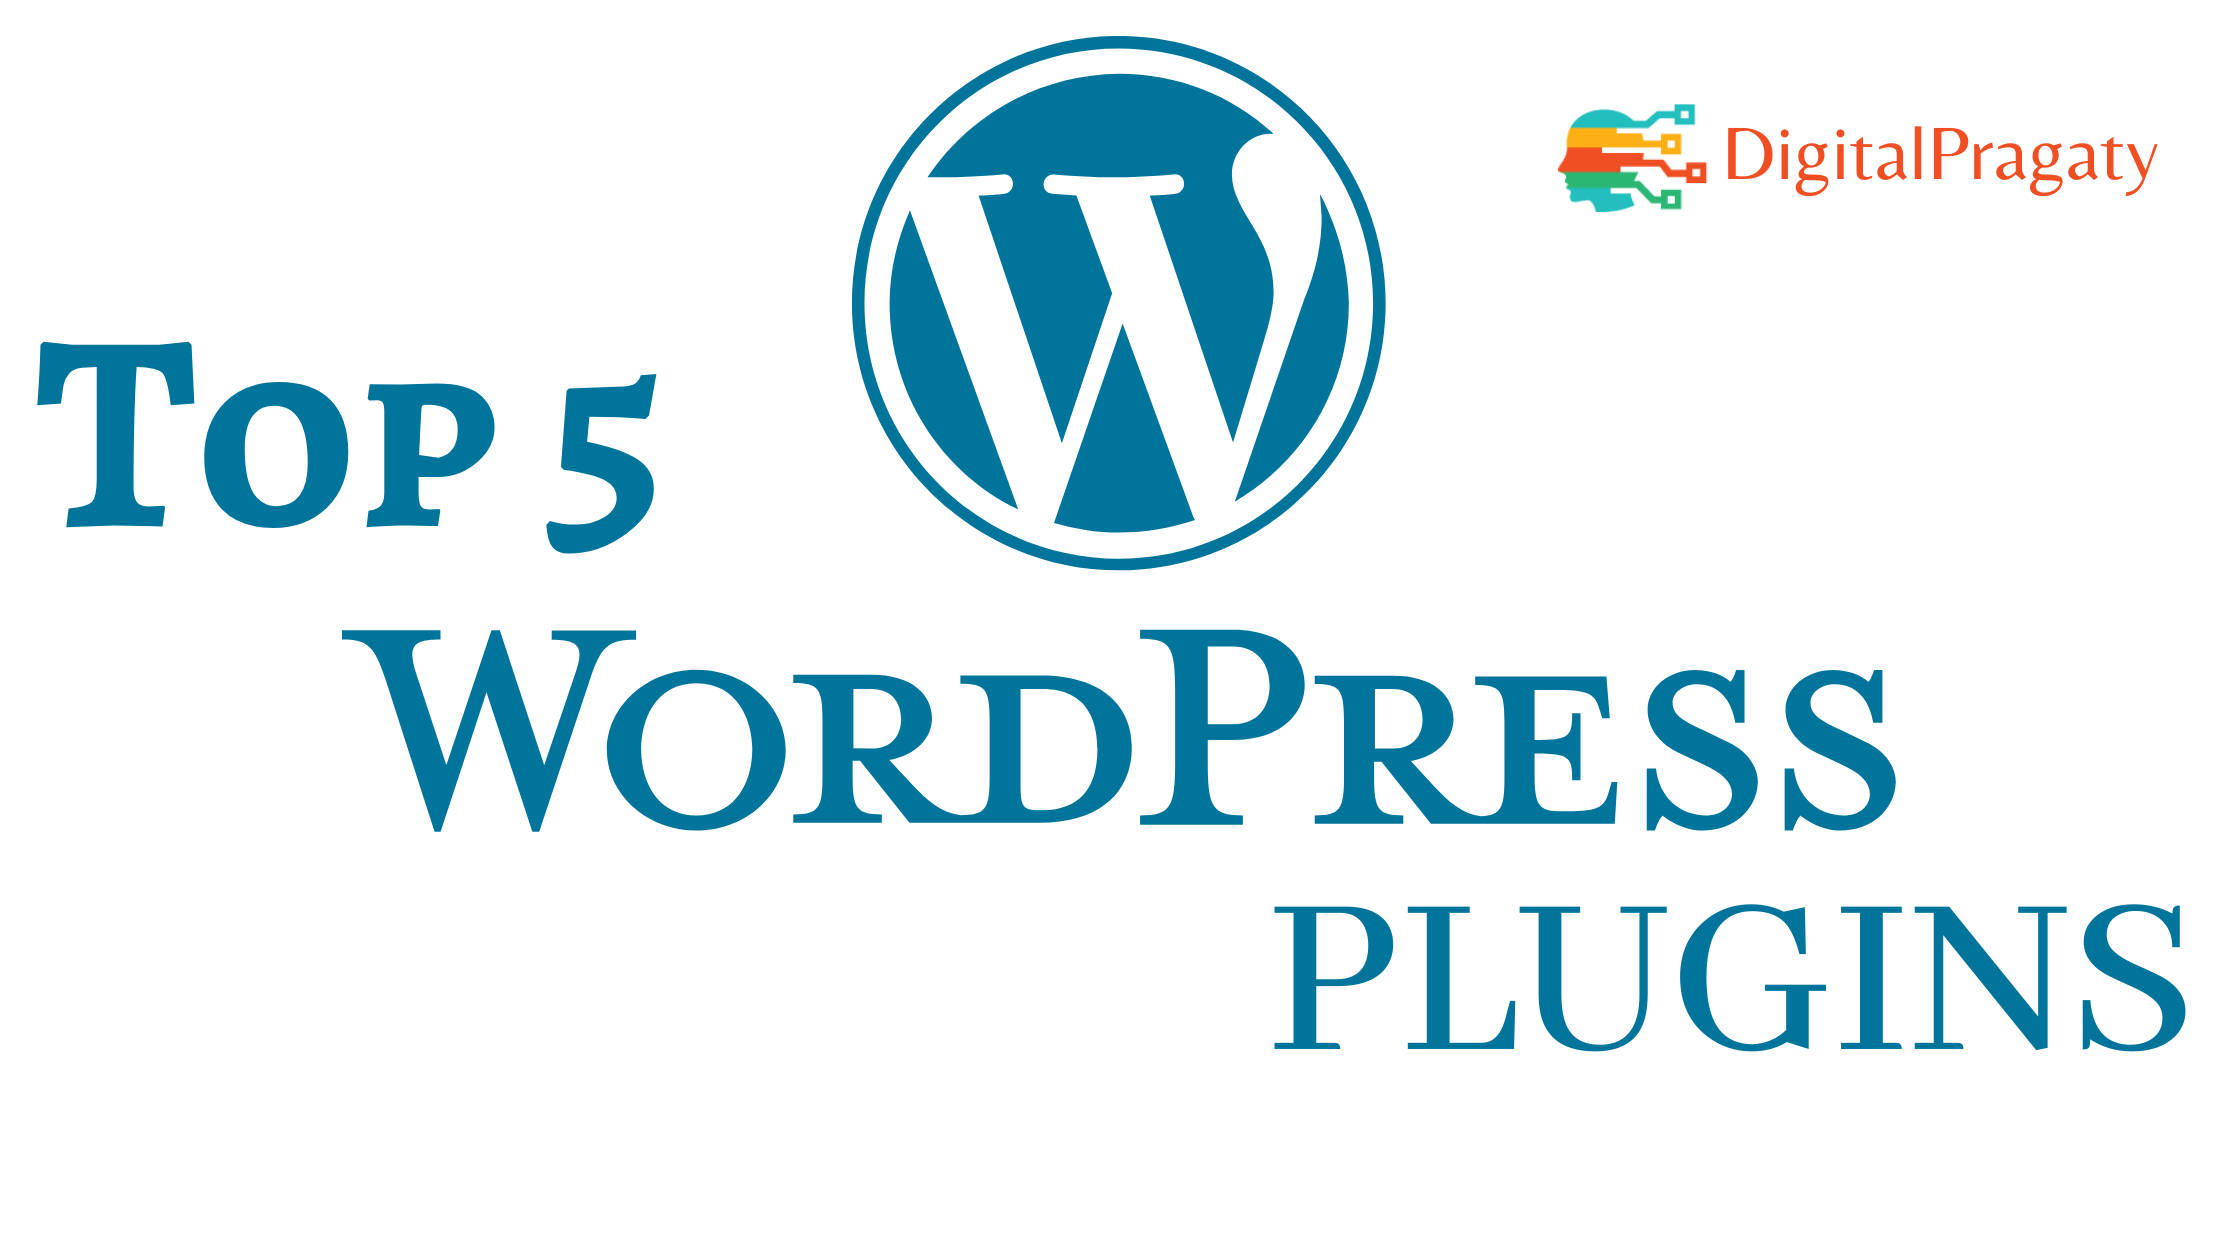 Top 5 WordPress Plugins